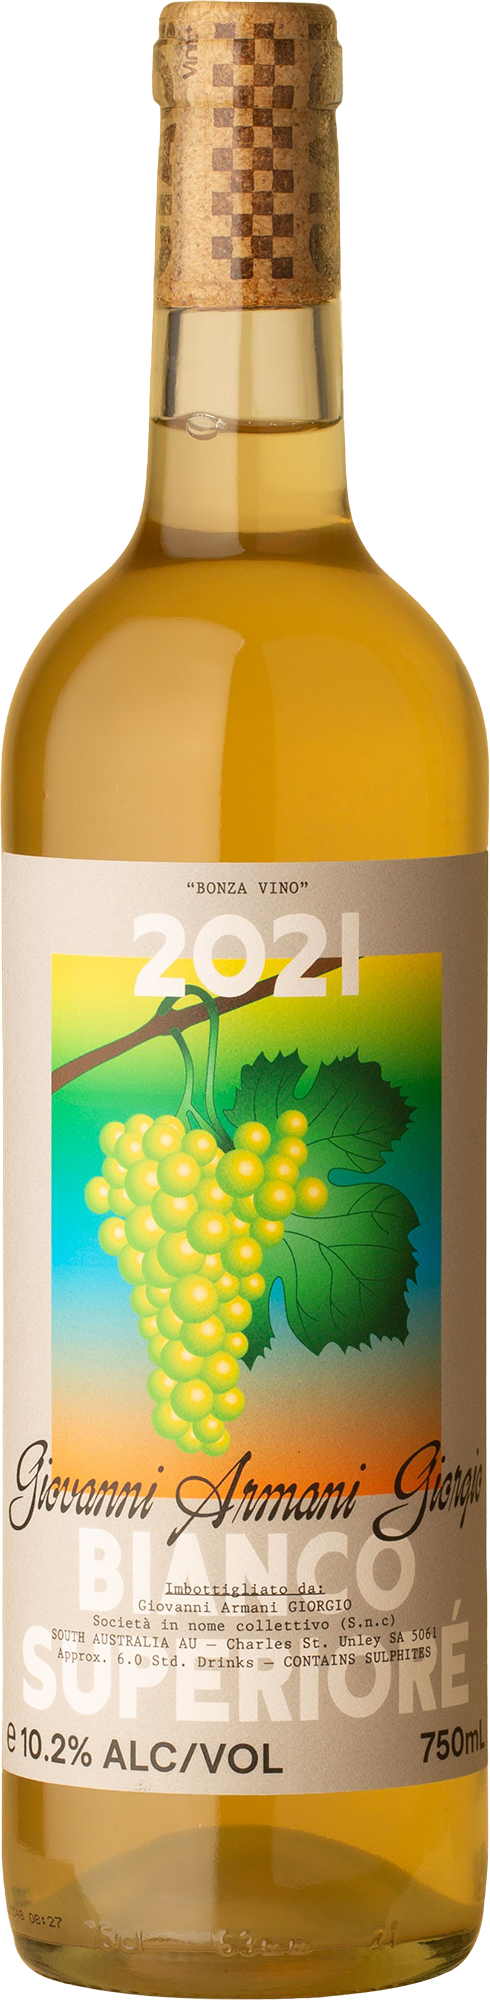 Giovanni Armani Giorgio - Bianco Superioré White Blend 2021 White Wine